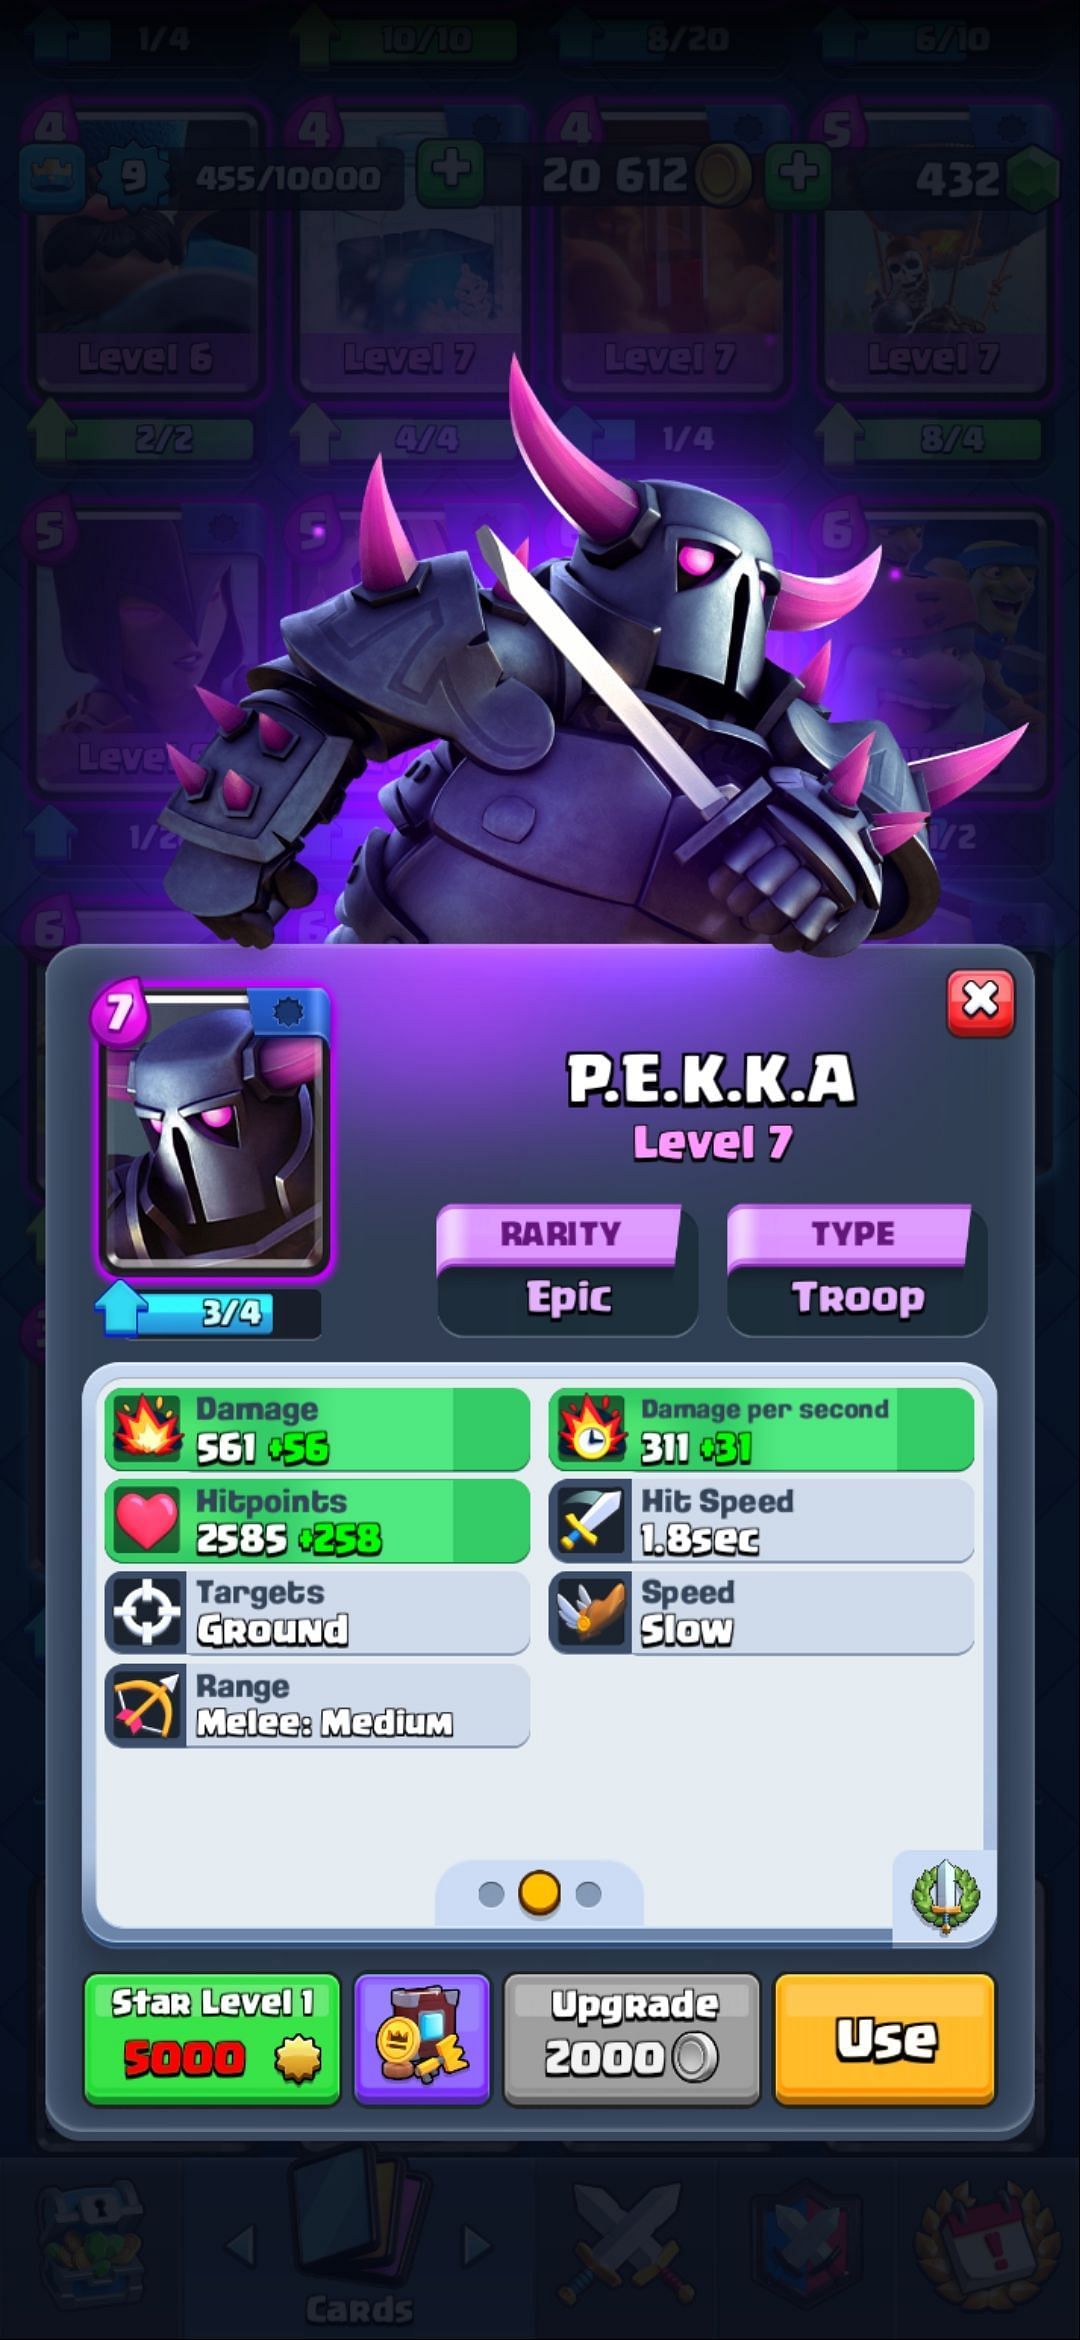 The Pekka card (Image via Sportskeeda)